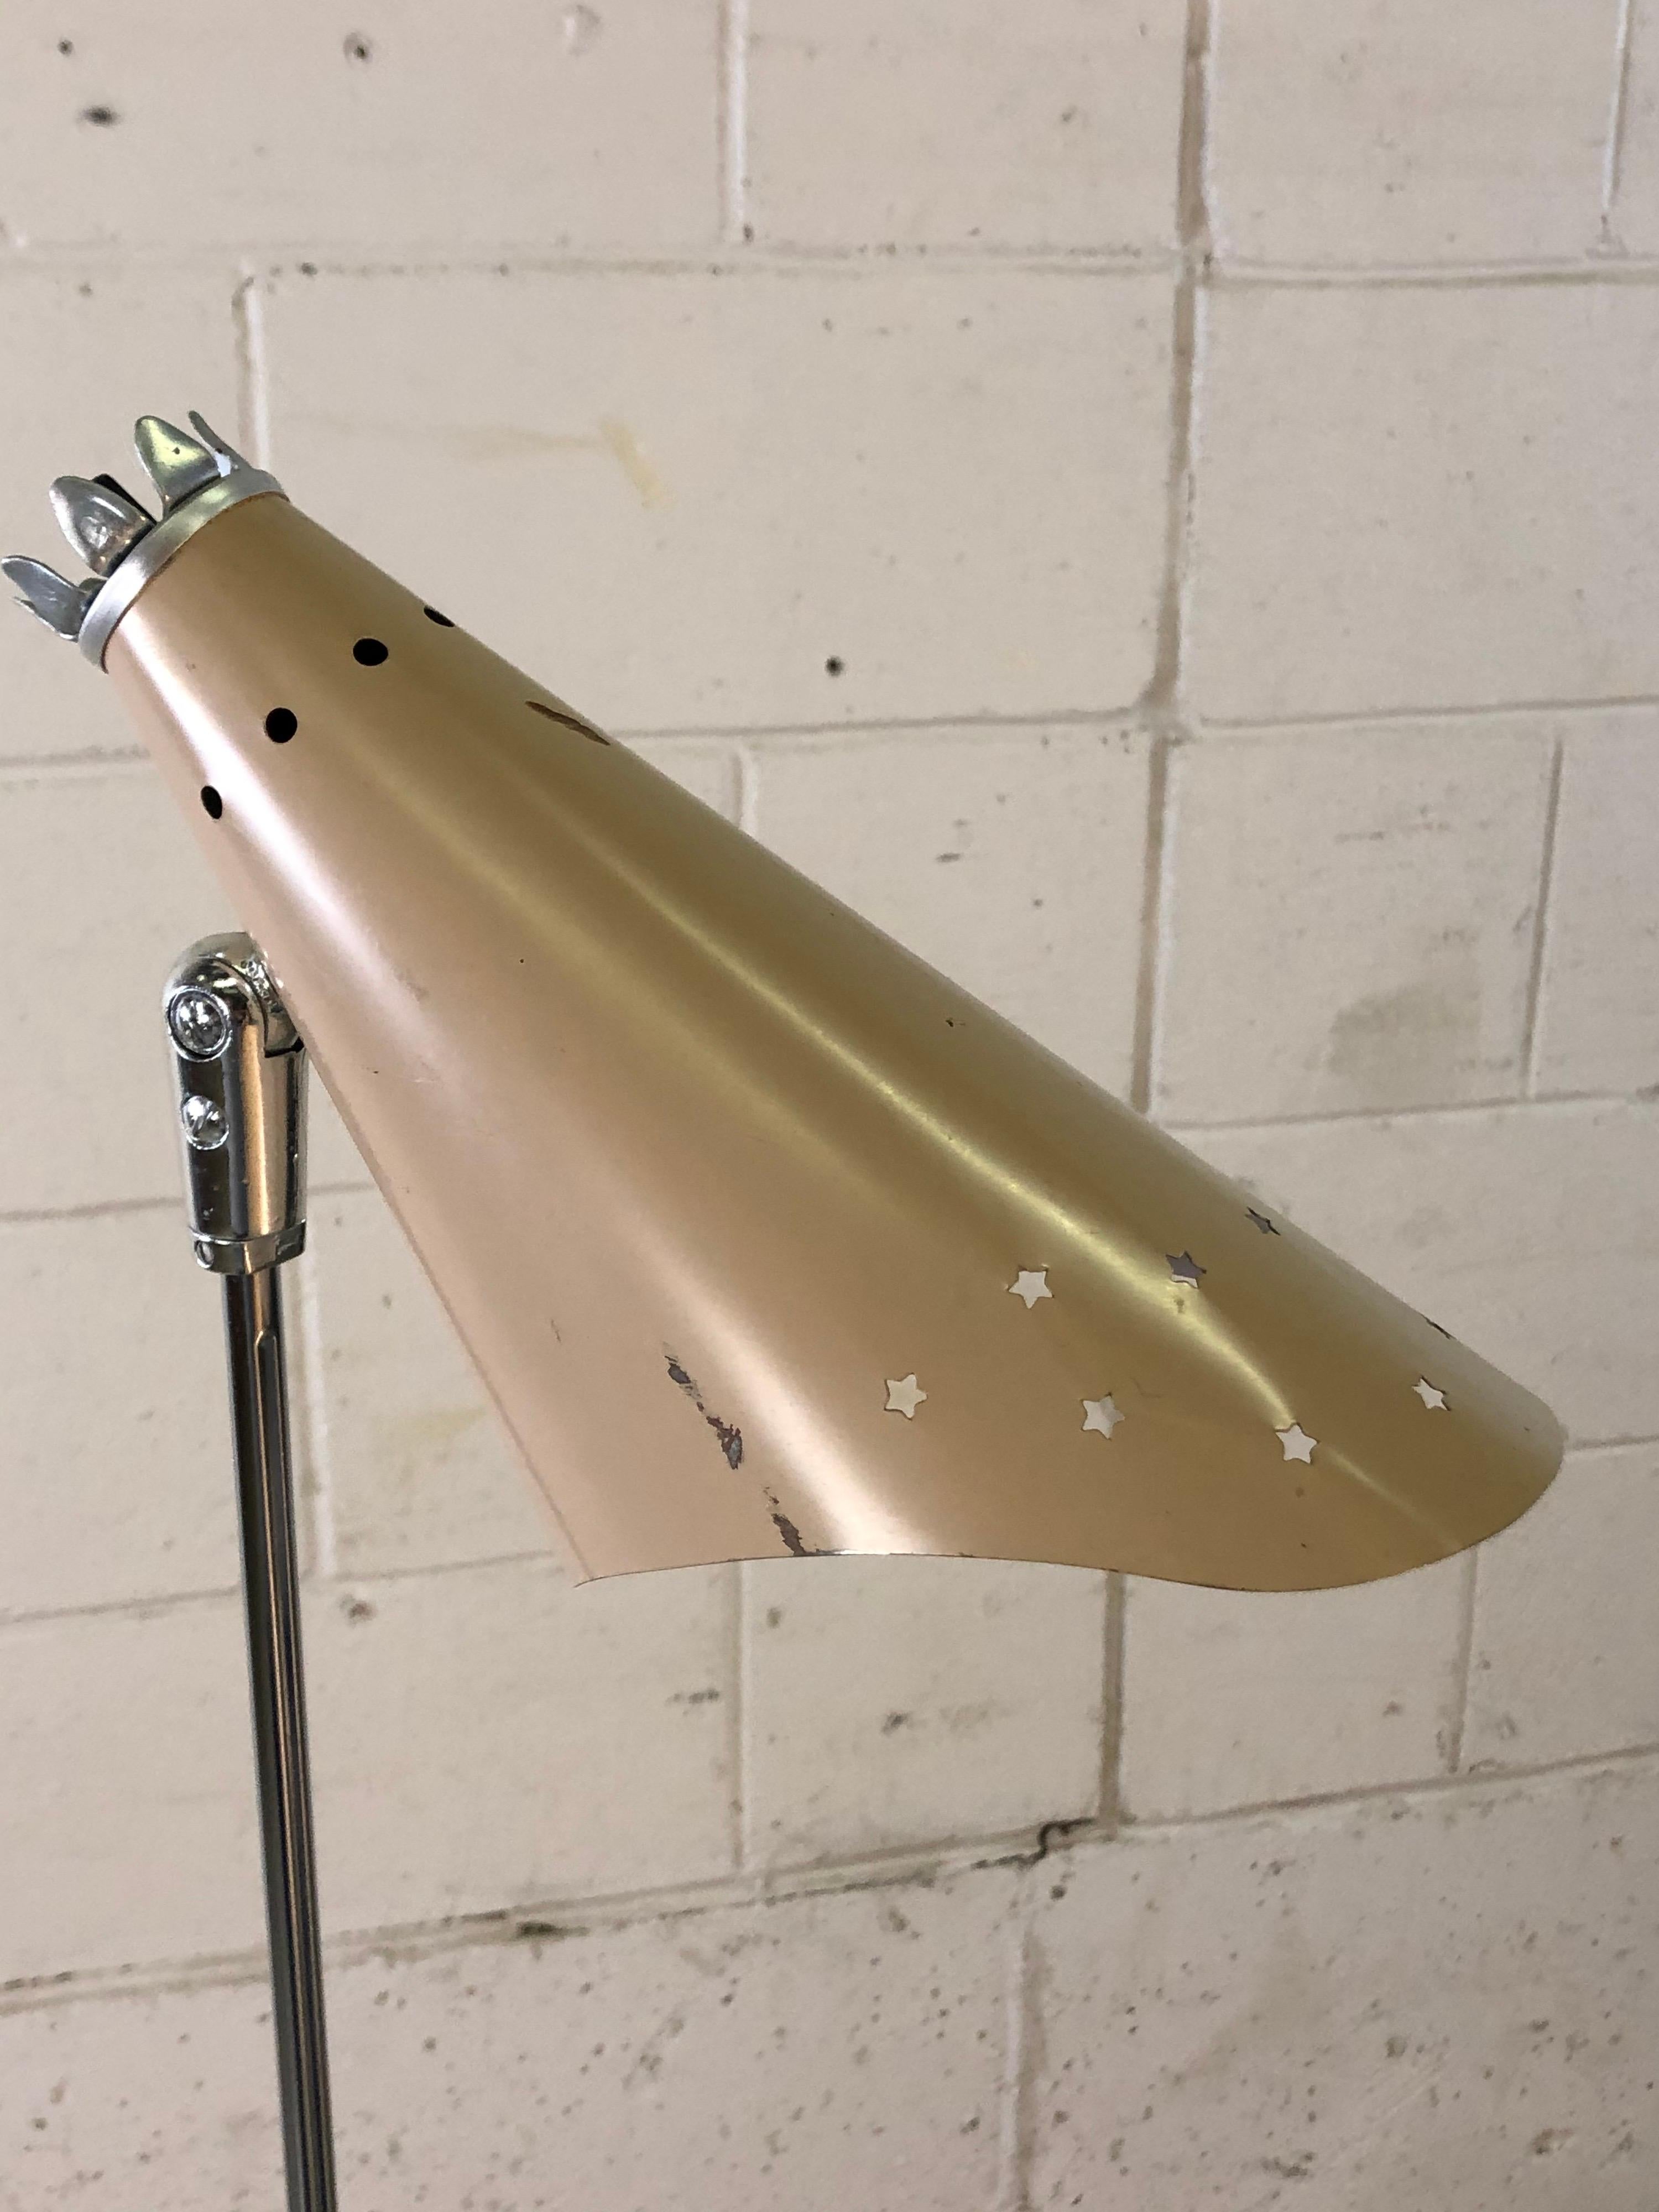 Mid-Century Modern 1950s Atomic Style Pink Metal Adjustable Floor Lamp For Sale